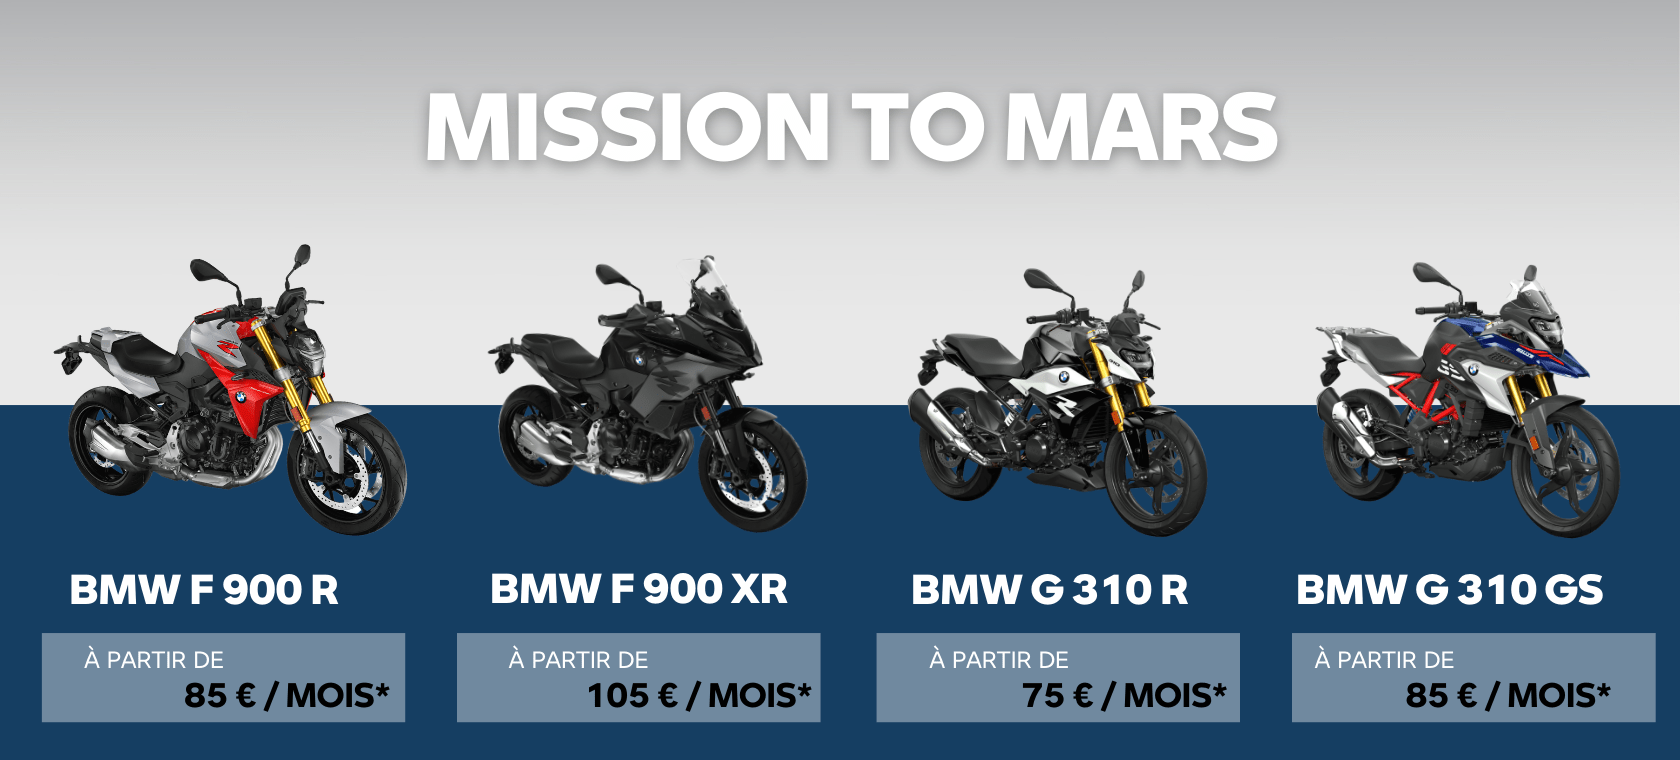 BMW Motorrad mission to Mars